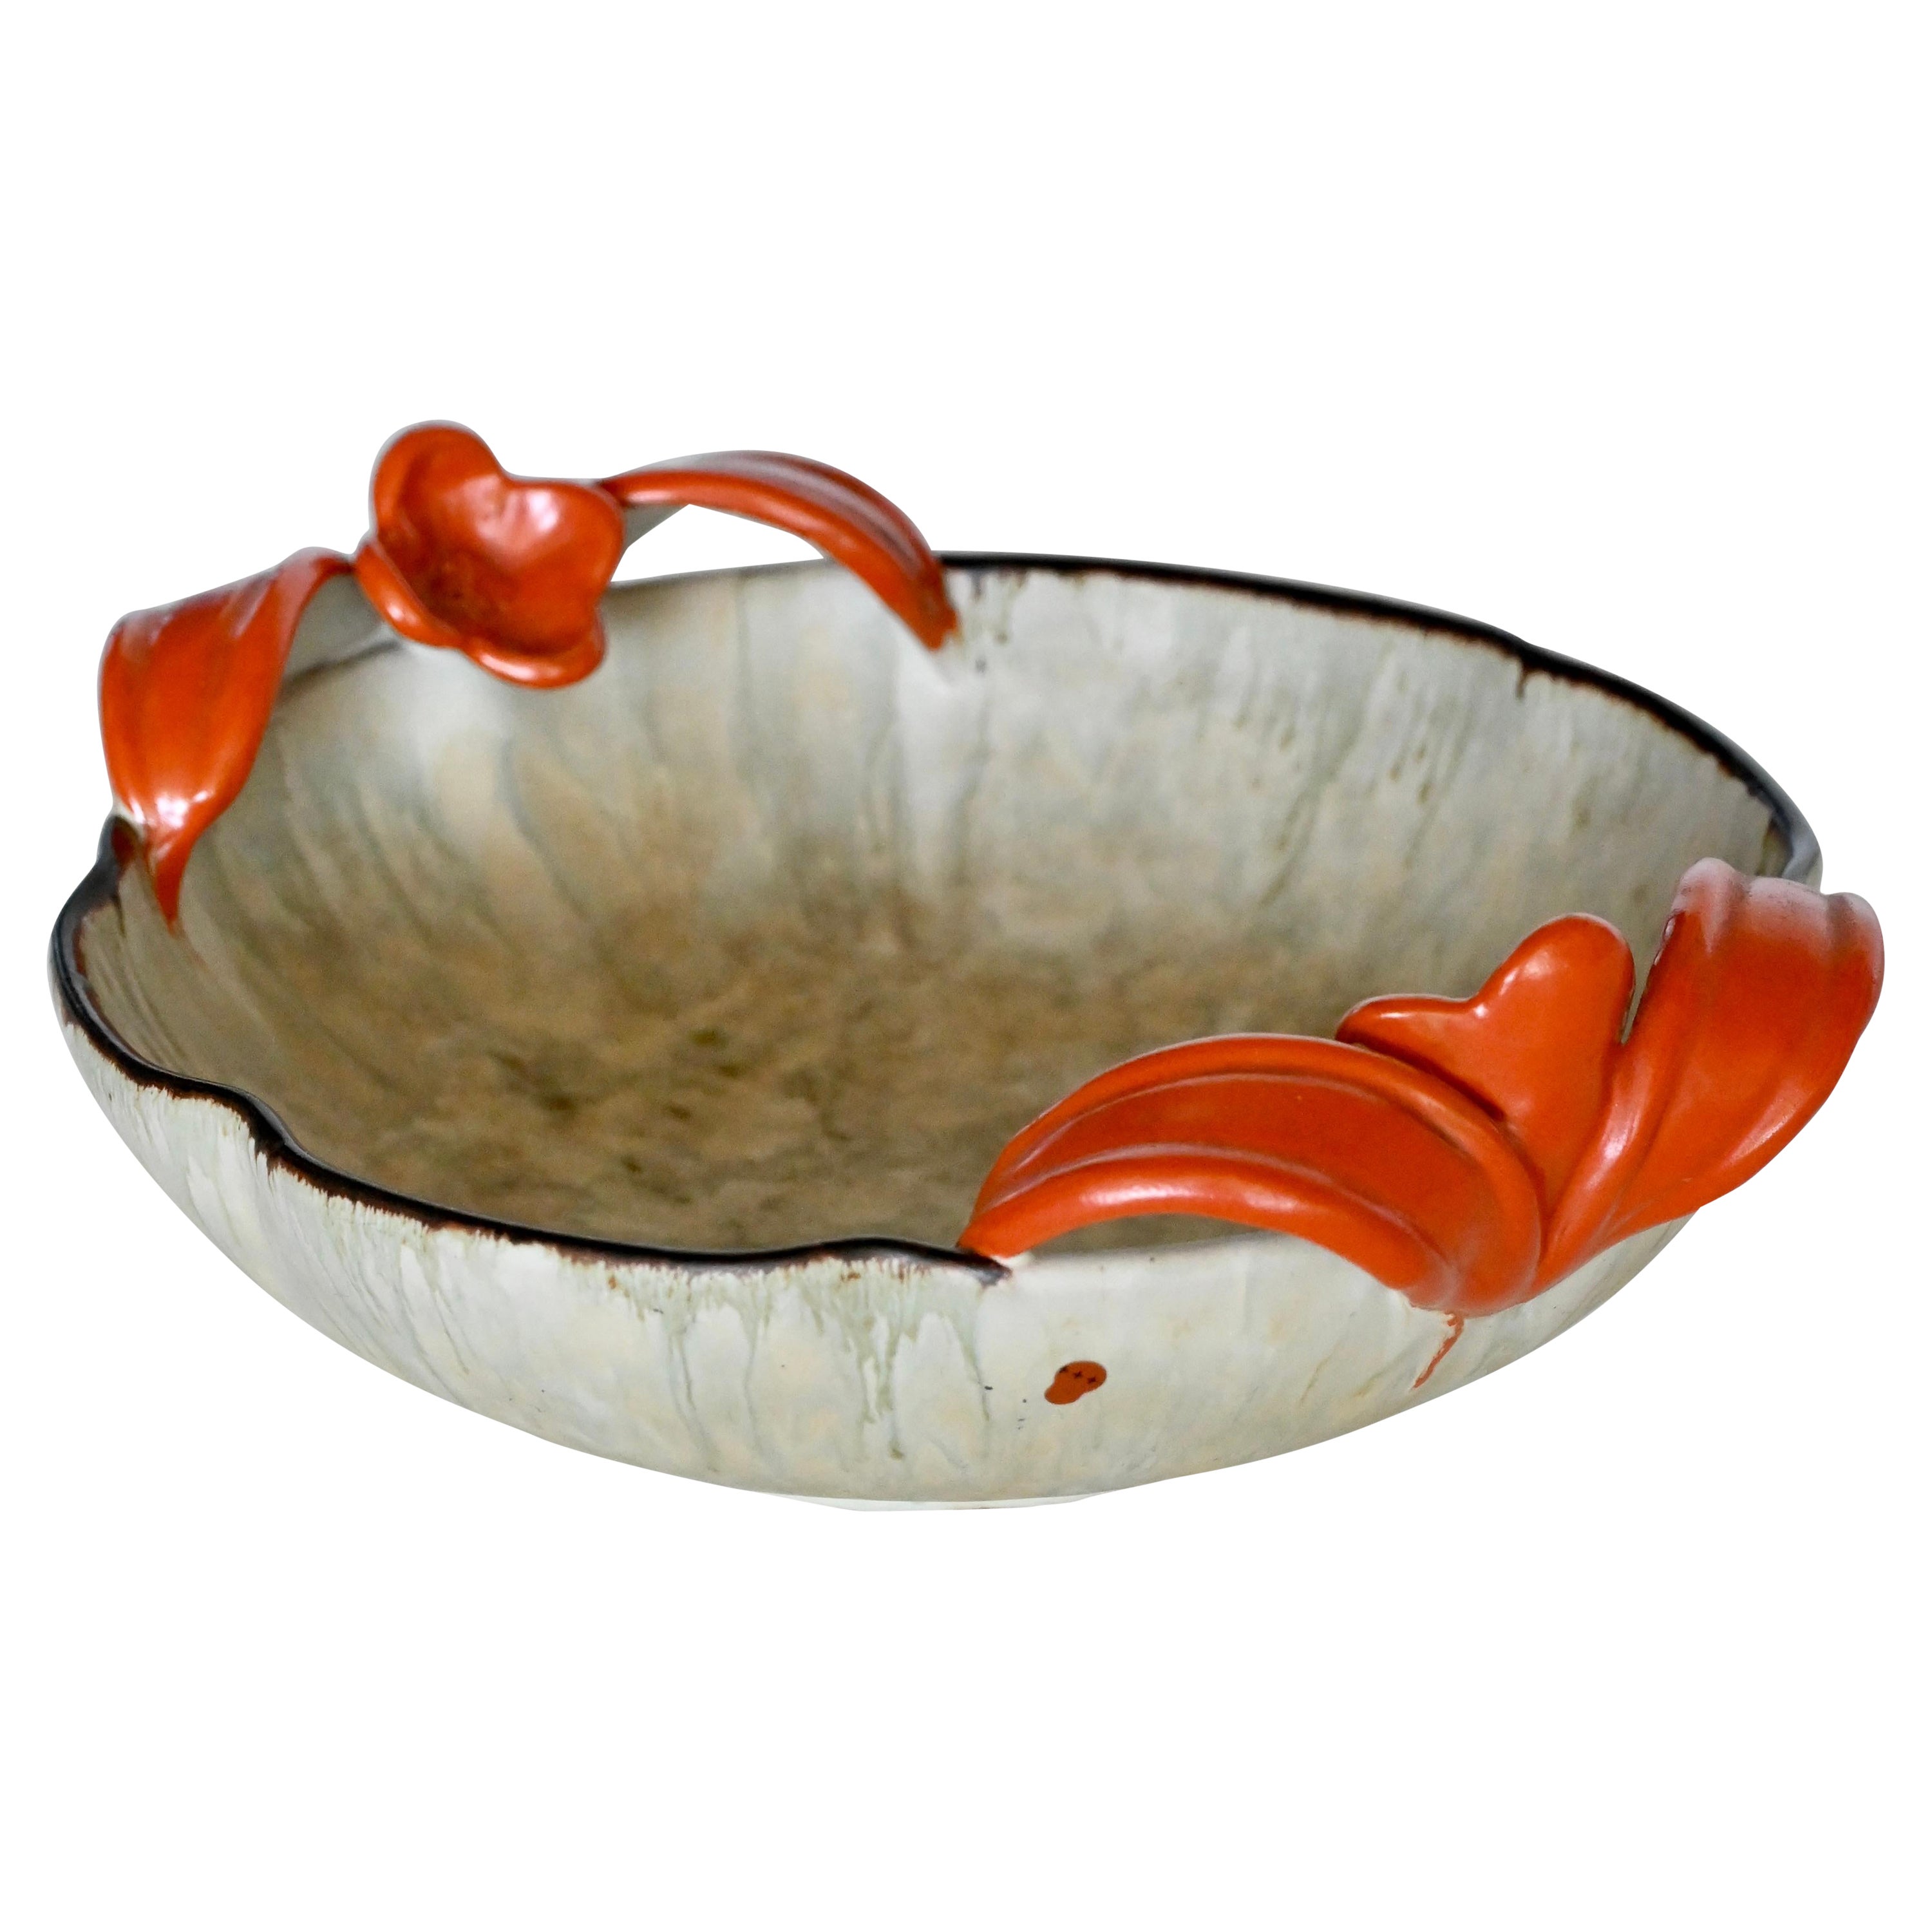 Glazed ceramic bowl by Anna-Lisa Thomson for Upsala-Ekeby. Sweden, 1940's